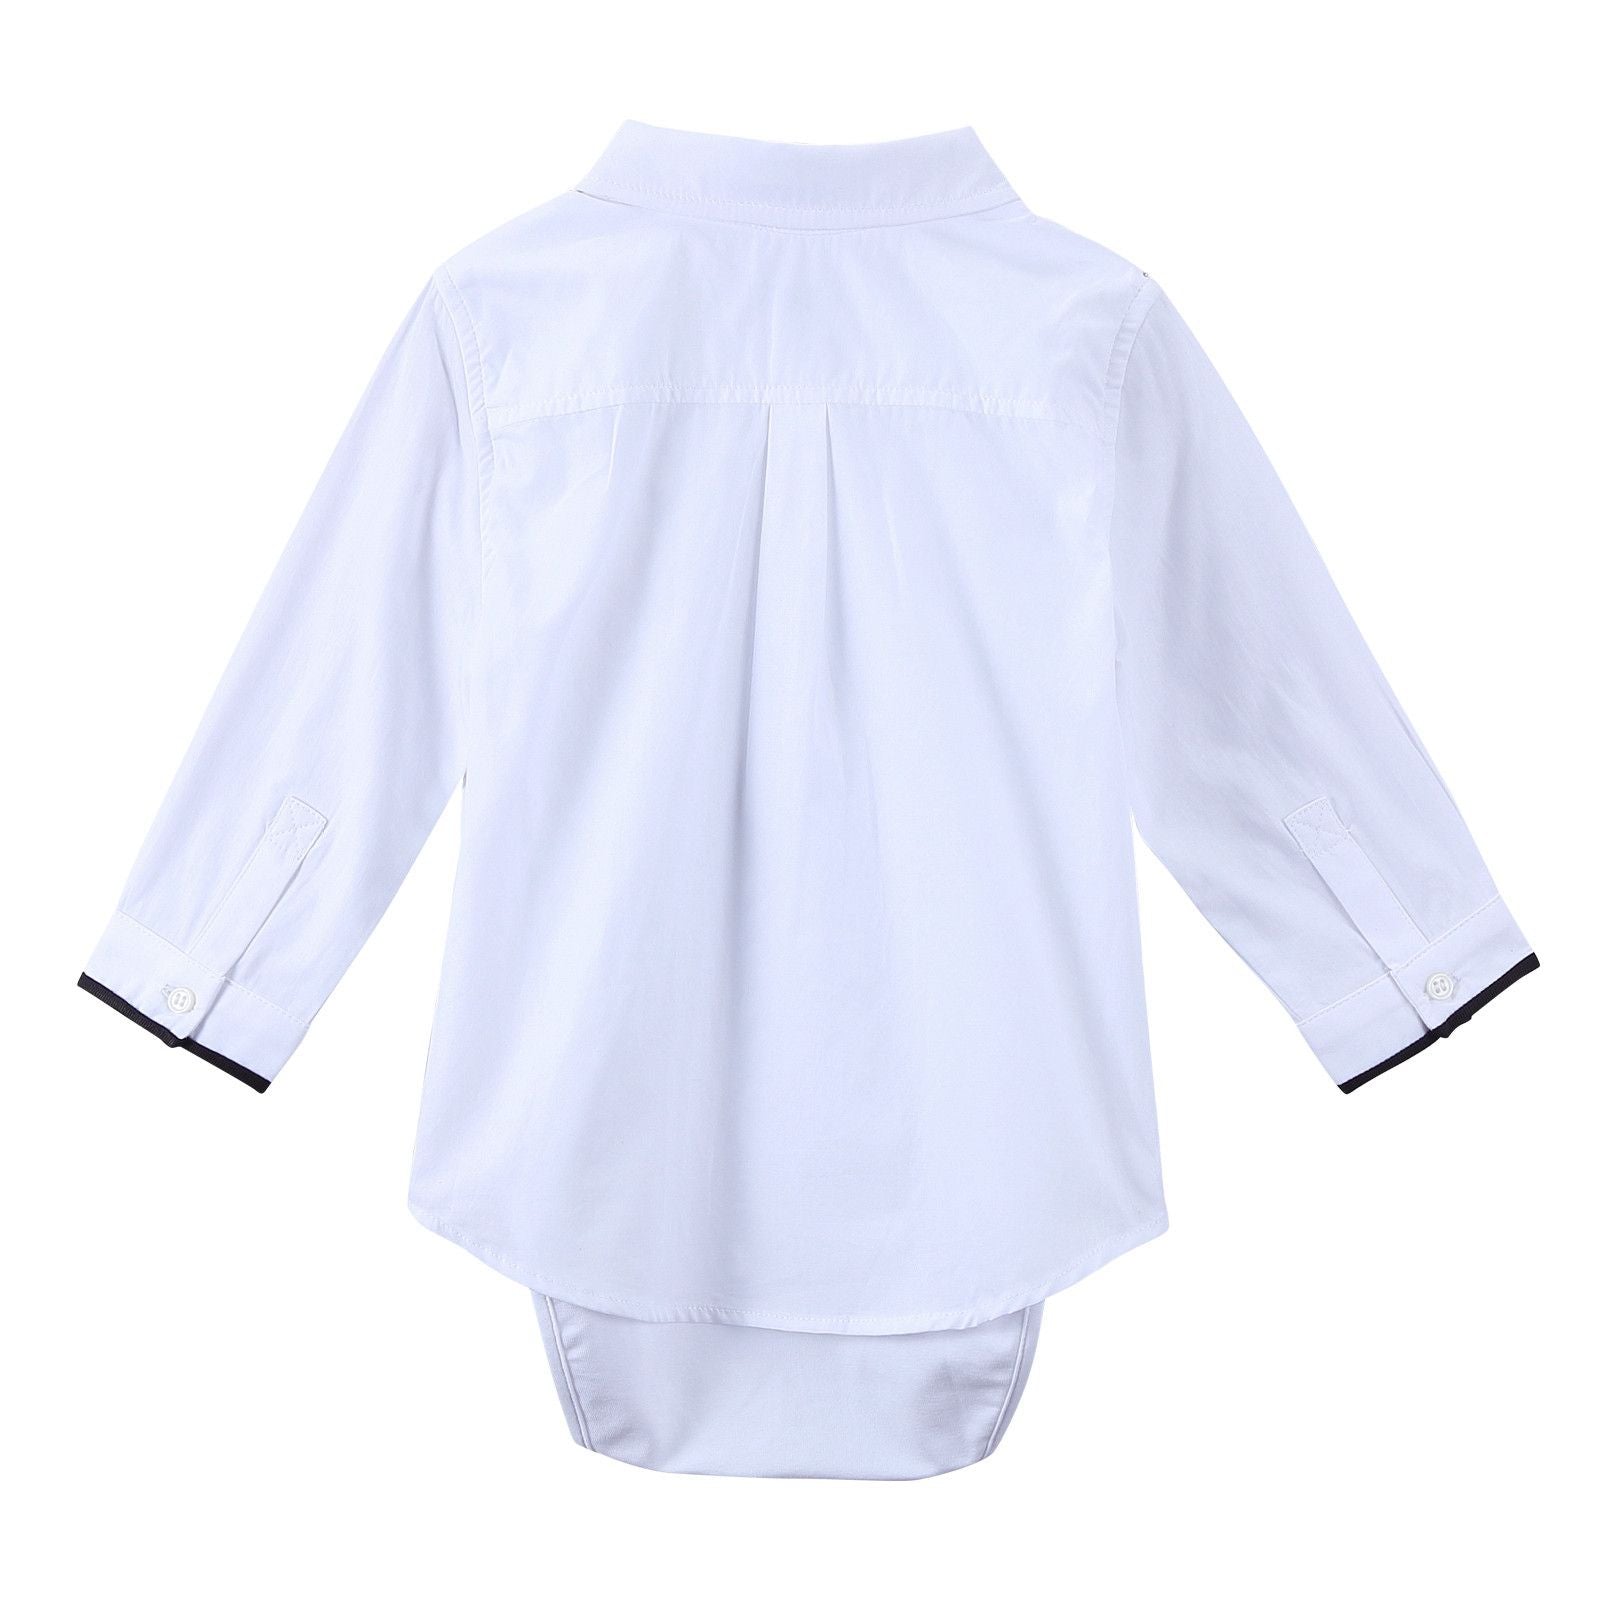 Baby White Shirt Style Cotton Bodysuit - CÉMAROSE | Children's Fashion Store - 2